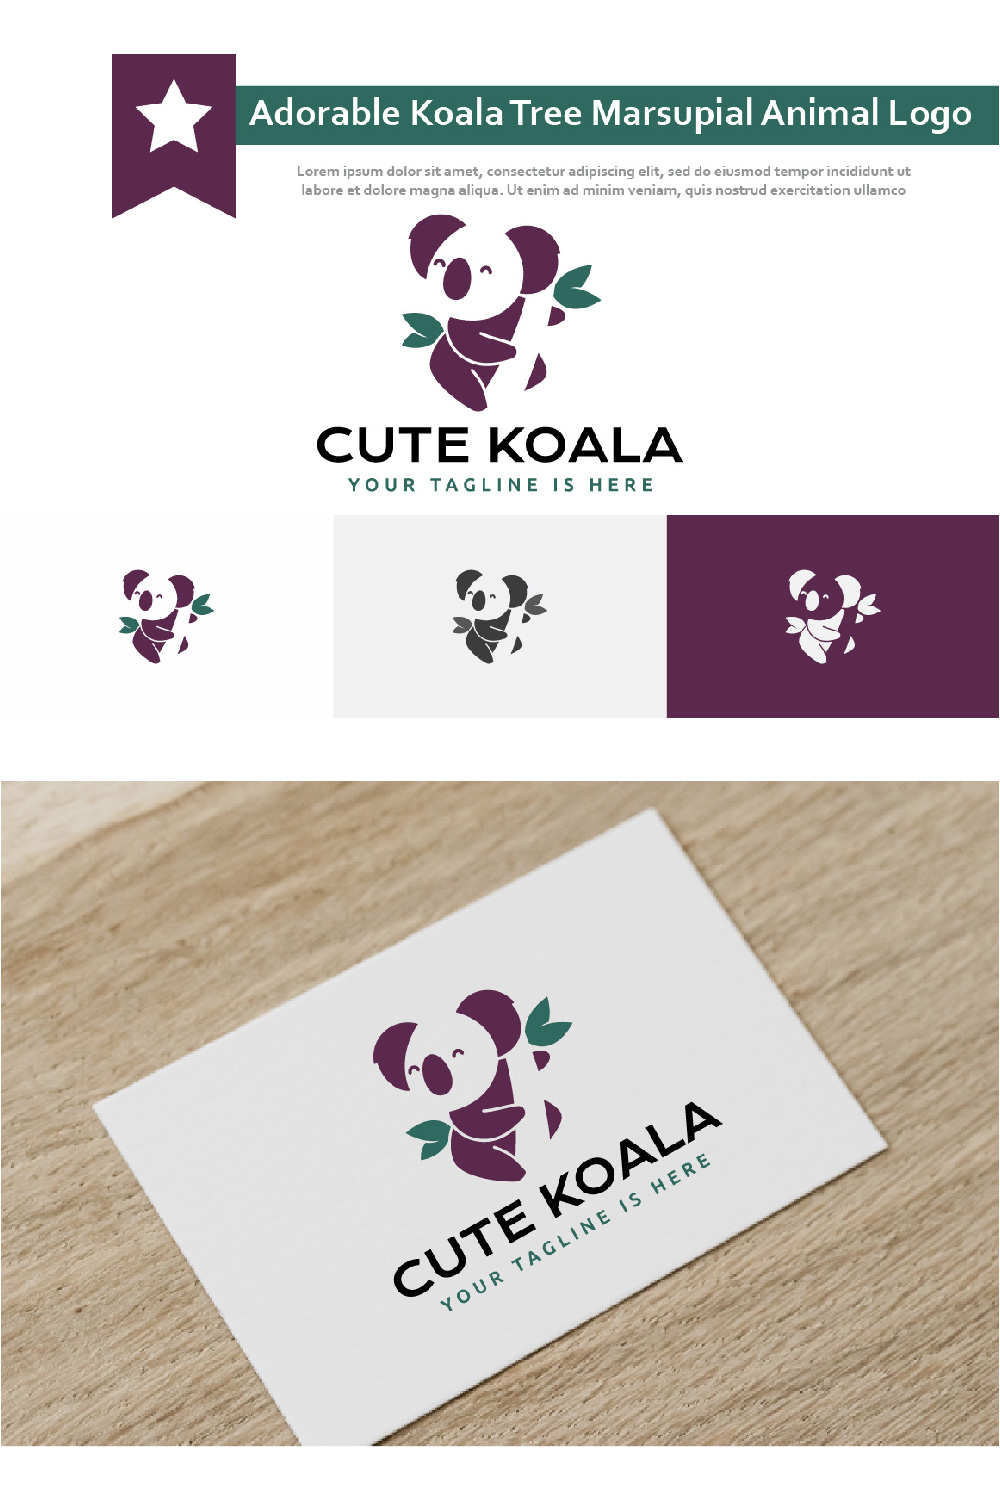 Adorable Koala Tree Marsupial Animal Zoo Nature Logo pinterest image.